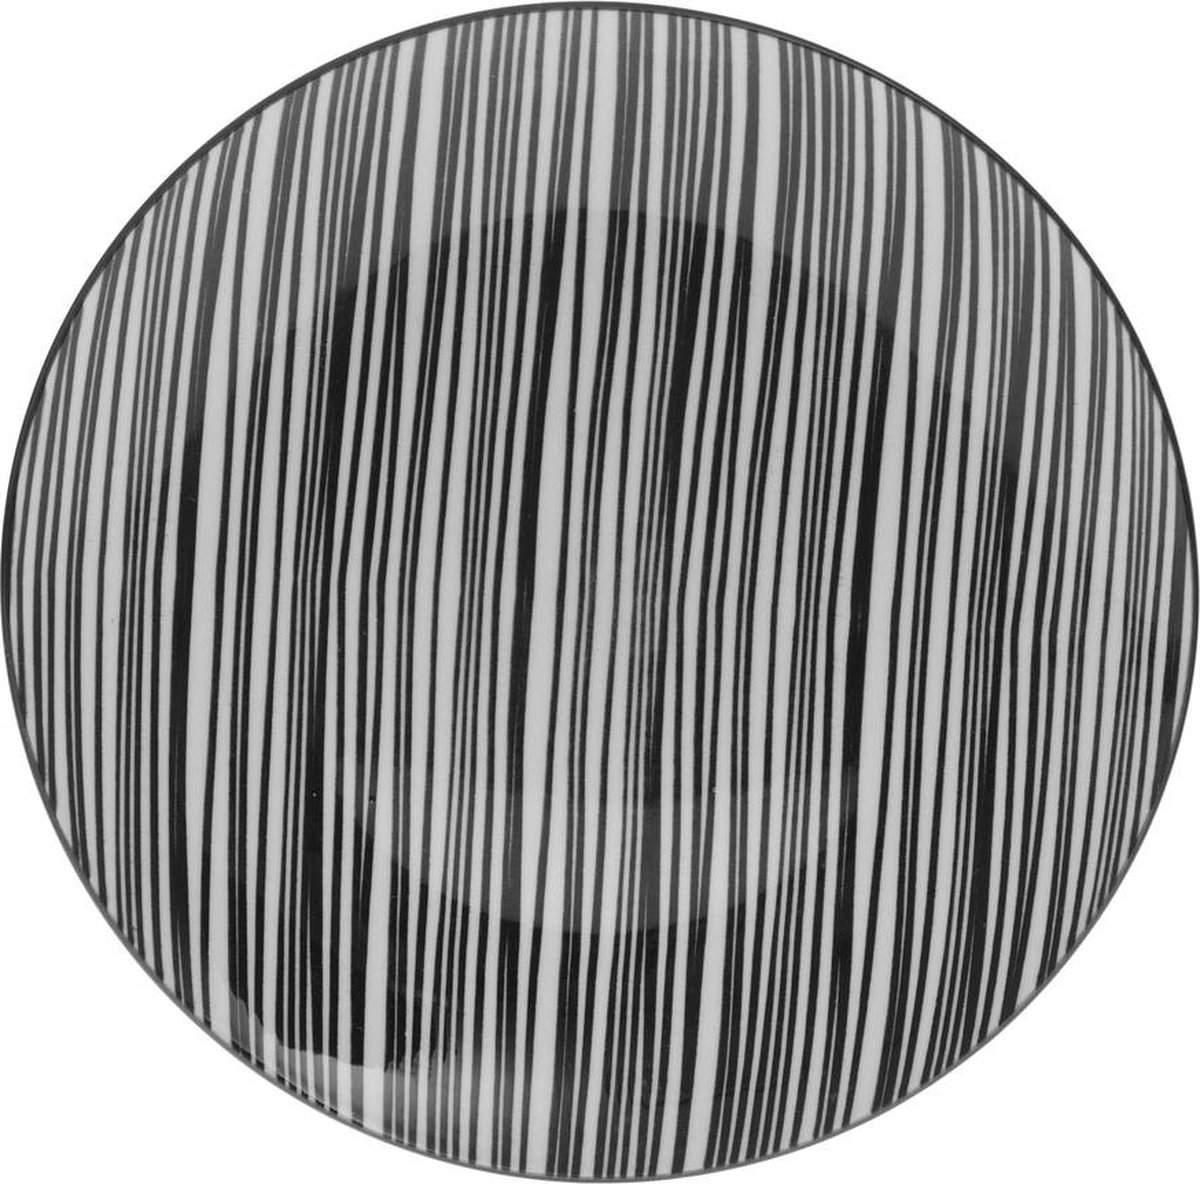 Set-6 Bordjes / Dessert bord - Zebra - porselein - zwart en wit - Ø 19 x 2 cm